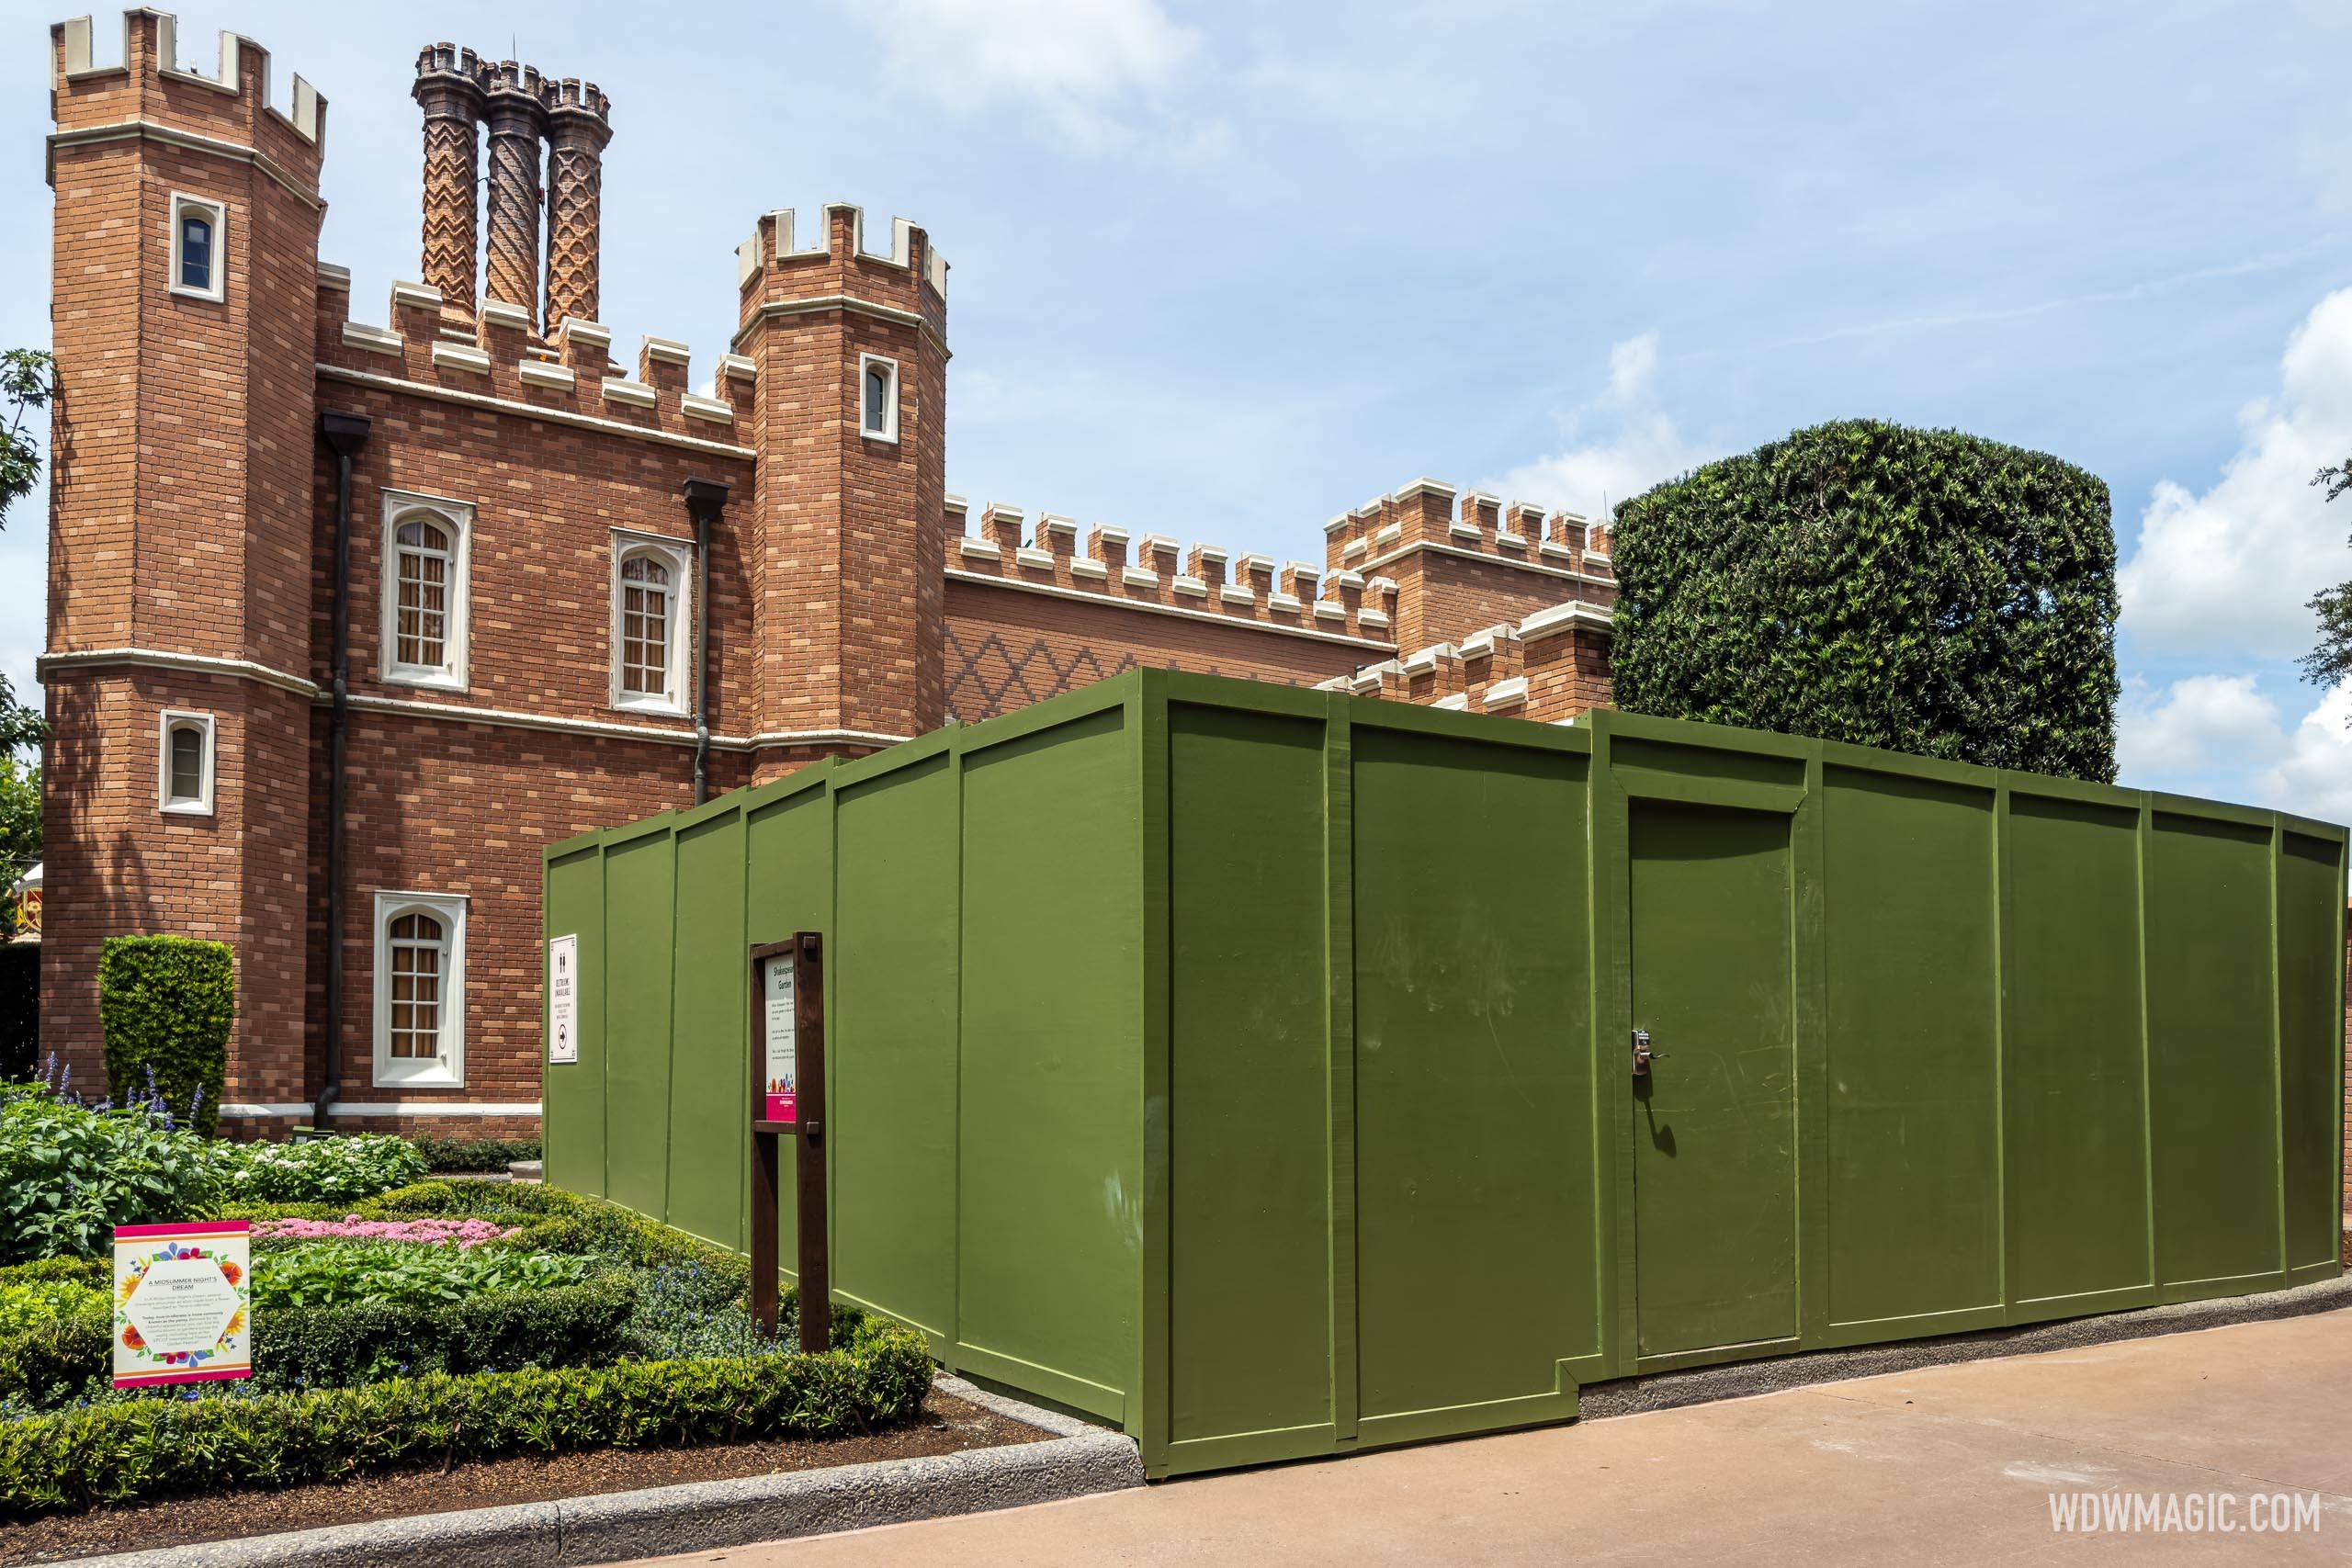 United Kingdom pavilion restrooms closed for refurbishment at EPCOT